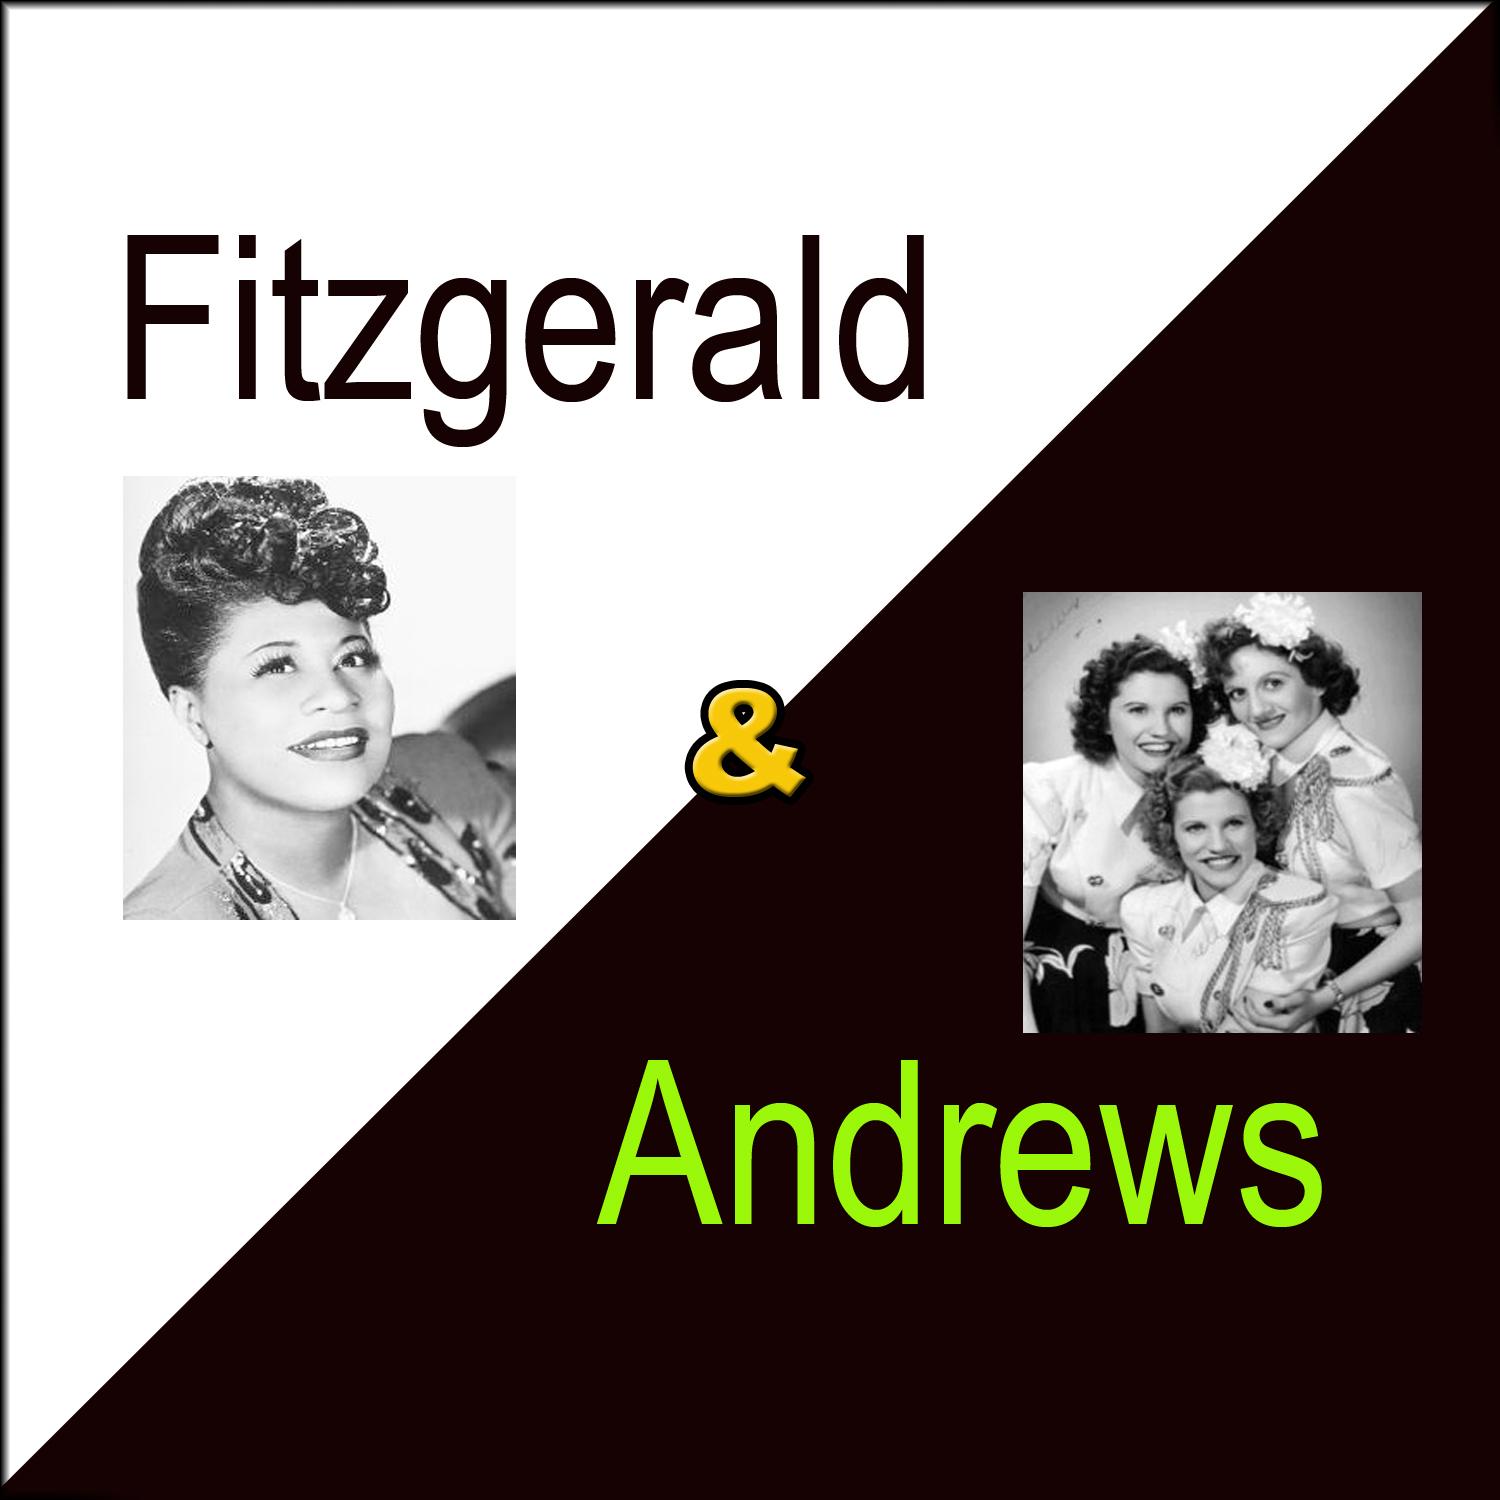 Fitzgerald & Andrews